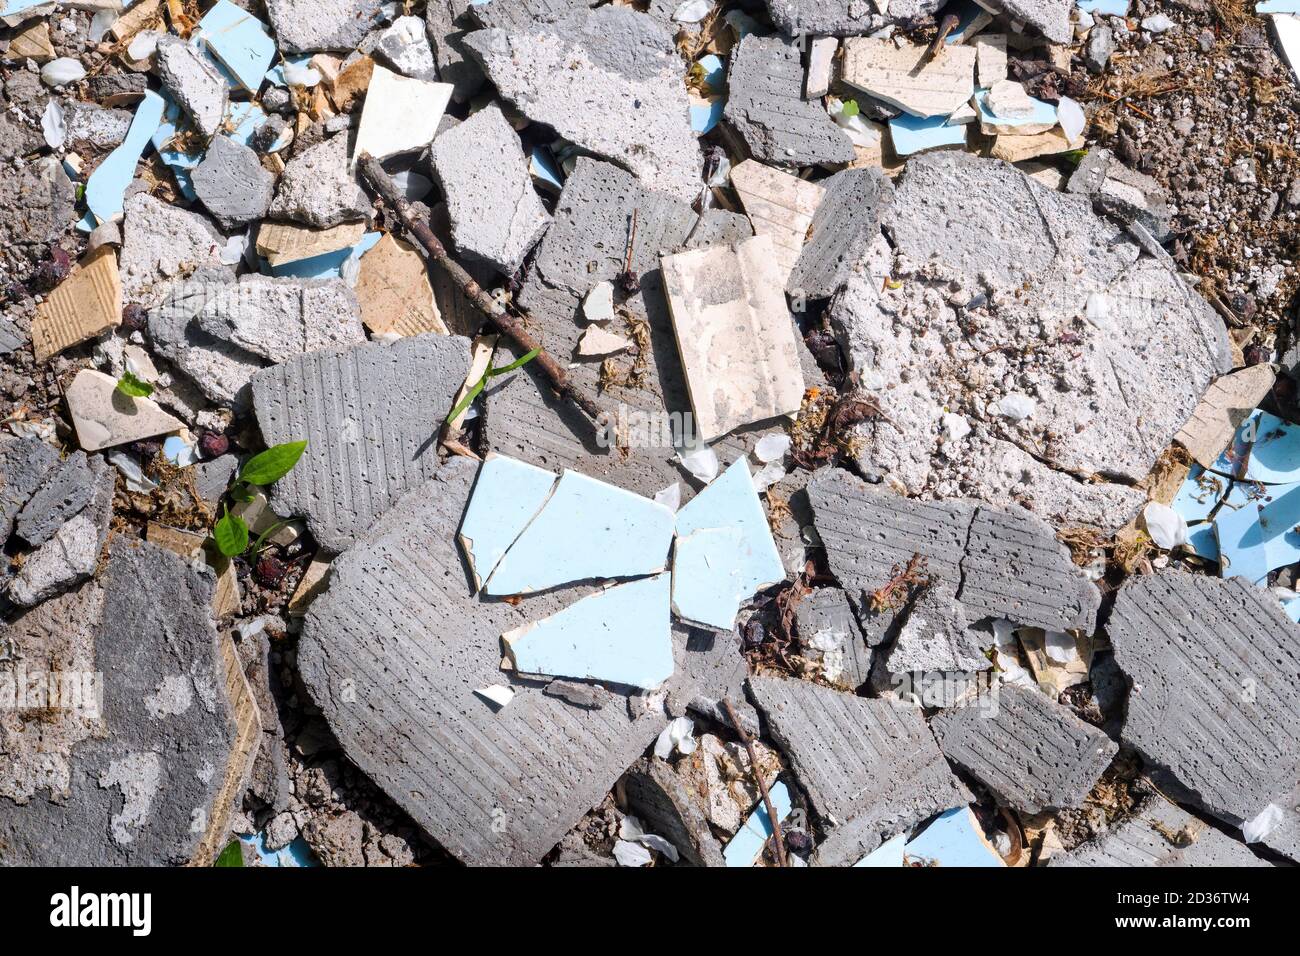 Debris, broken concrete panels, tiles on a sunny day, top view. Stock Photo